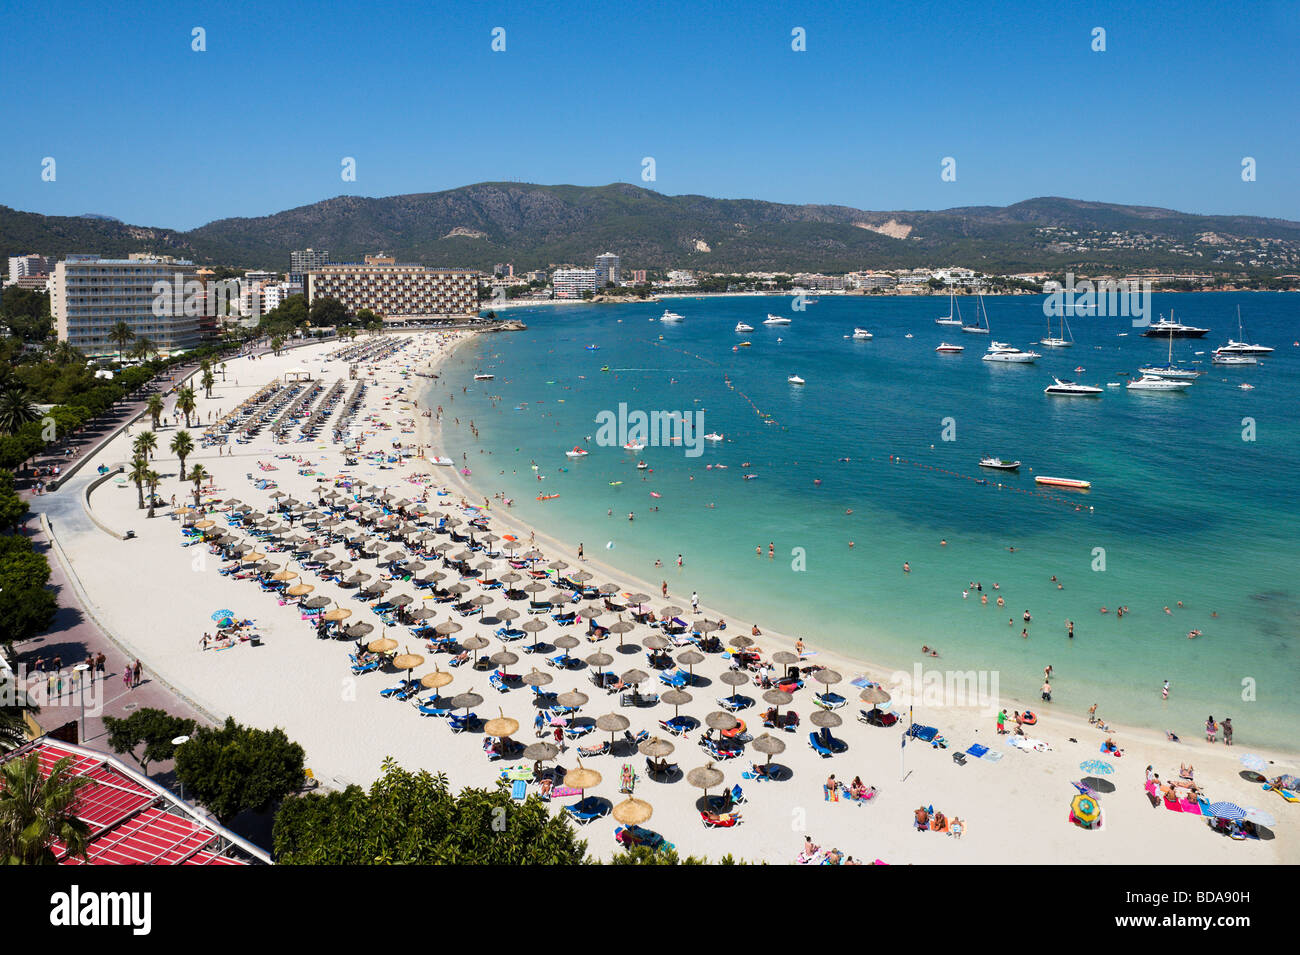 View over the main beach at Palmanova, Bay of Palma, South Coast, Mallorca, Balearic Islands, Spain Stock Photo